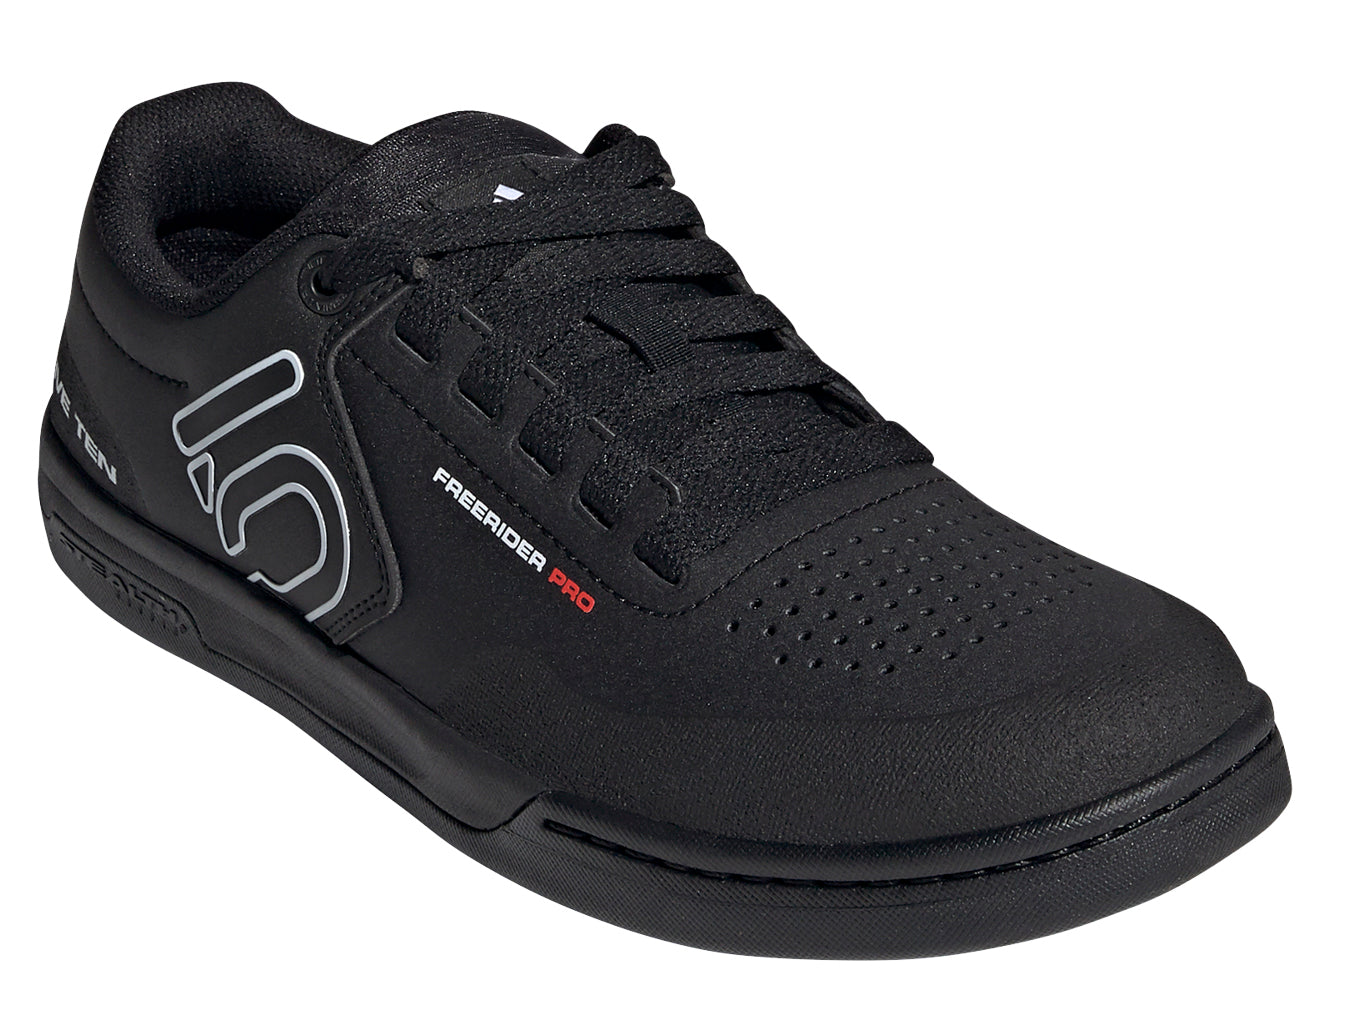 Men's Adidas Five Ten Freerider Pro Biking Shoe in Core Black/Cloud White/Cloud White from the front